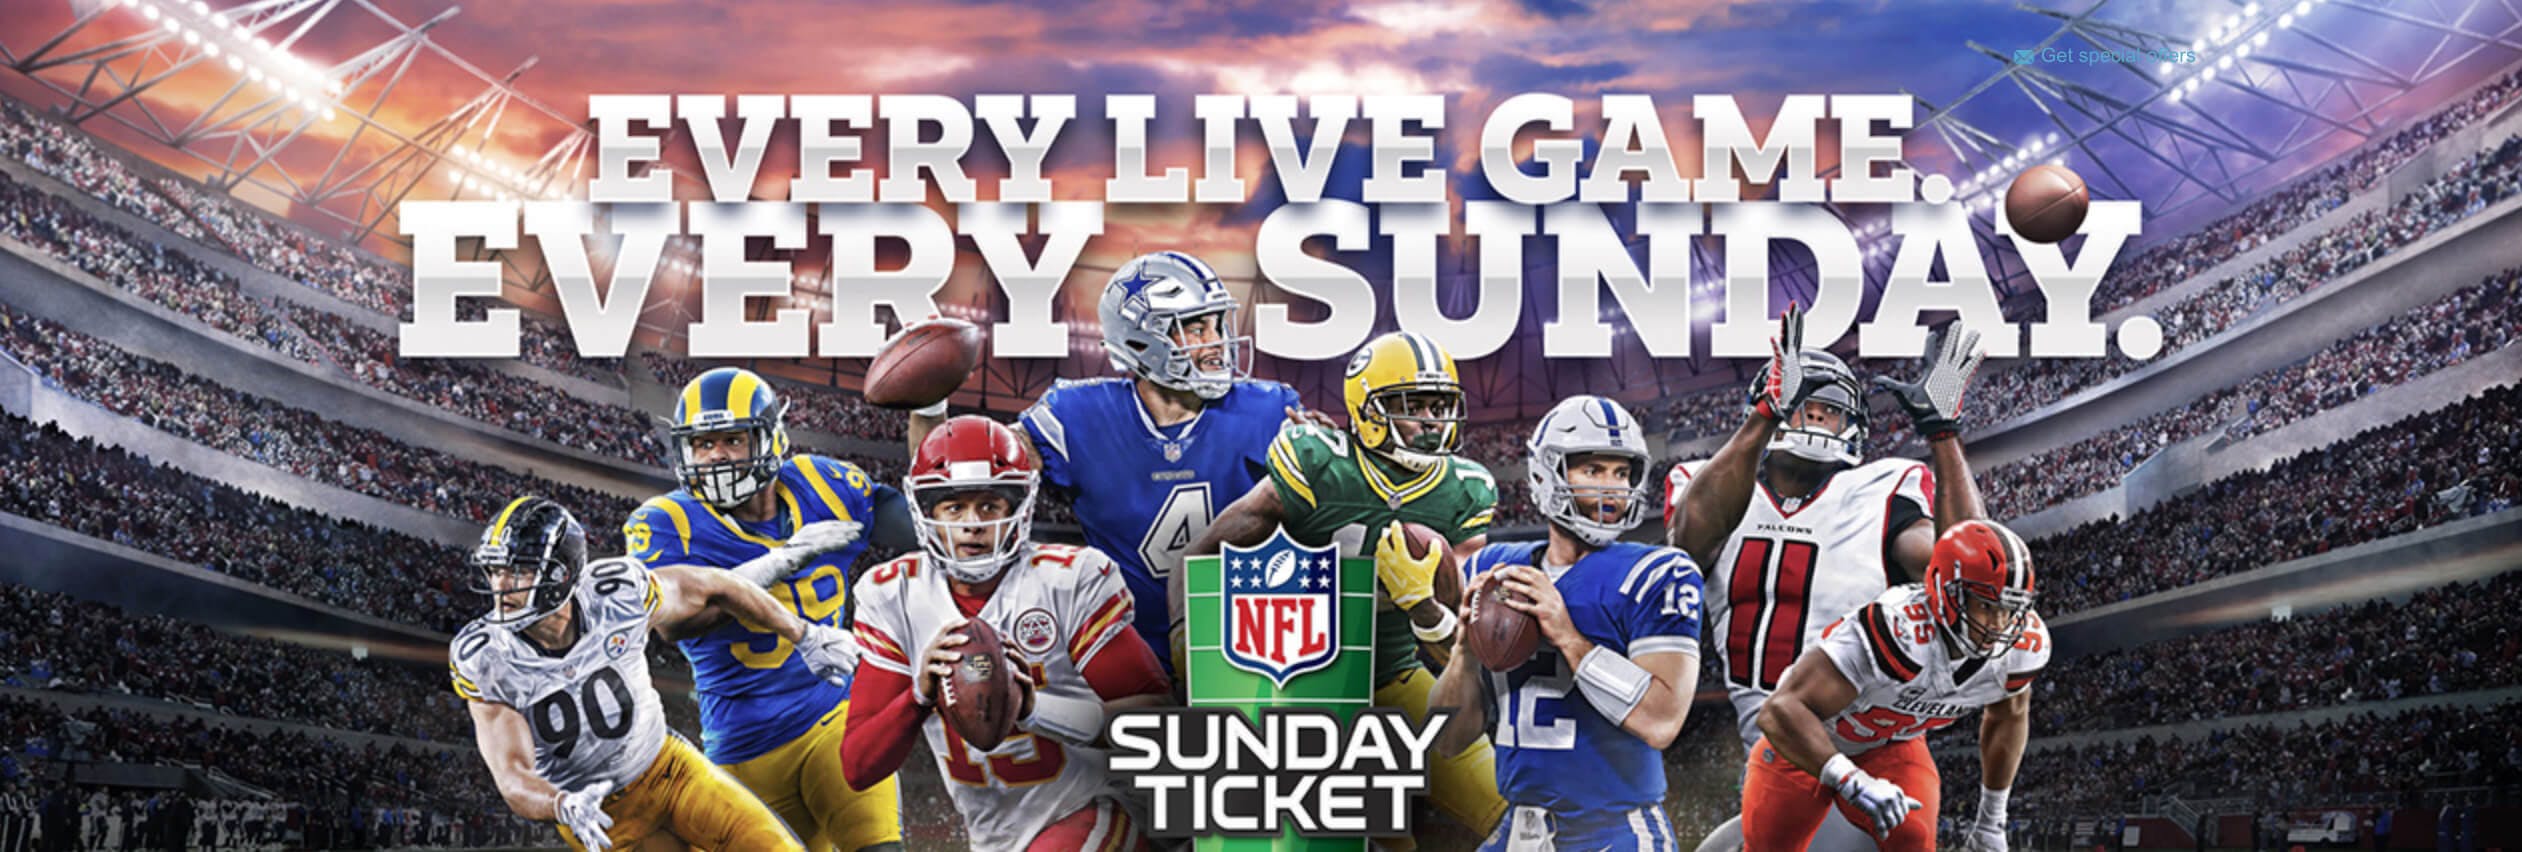 NFL Sunday Ticket Discount - wide 9